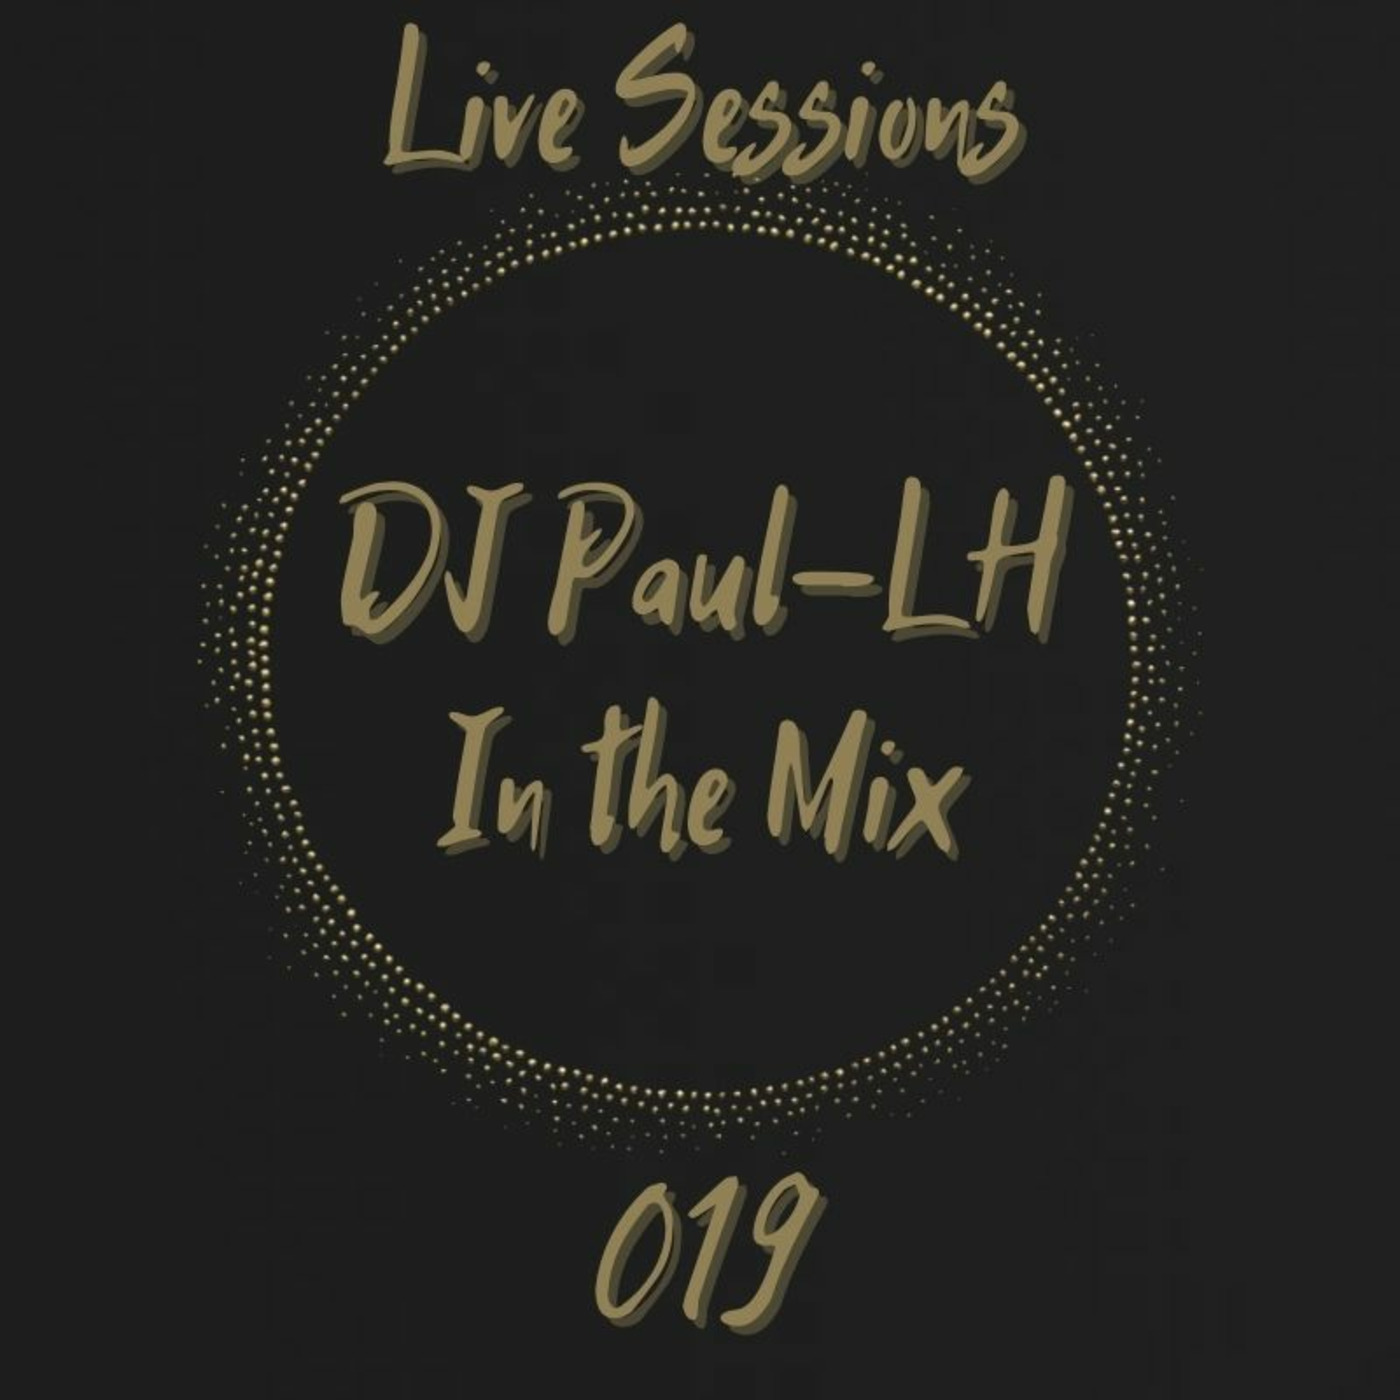 Live Sessions 019